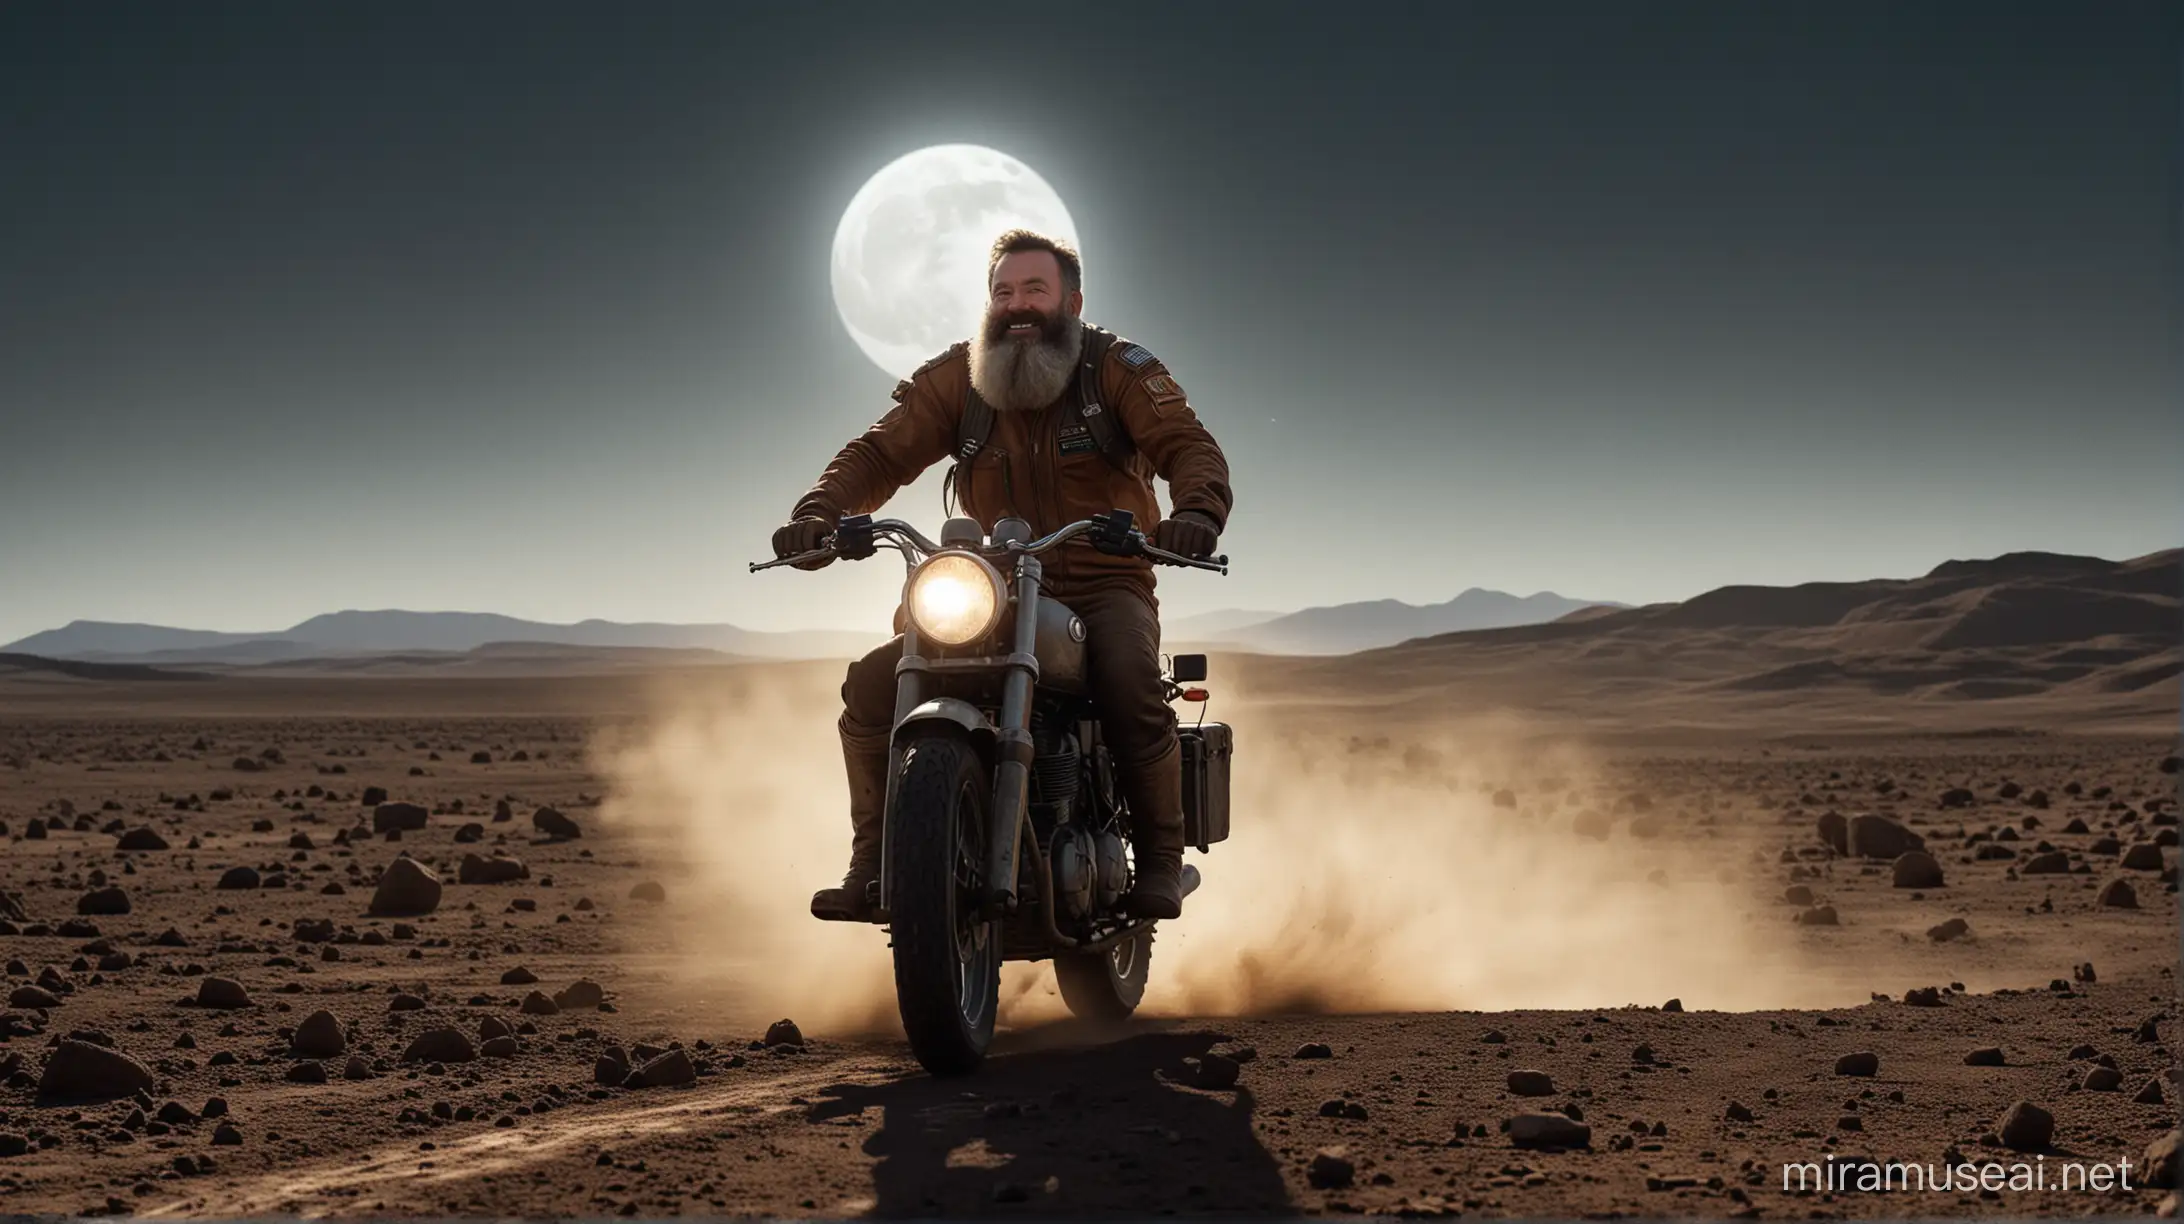 Moon Motorcycle Adventure Joyous Middleaged Man Speeding Across Lunar Surface